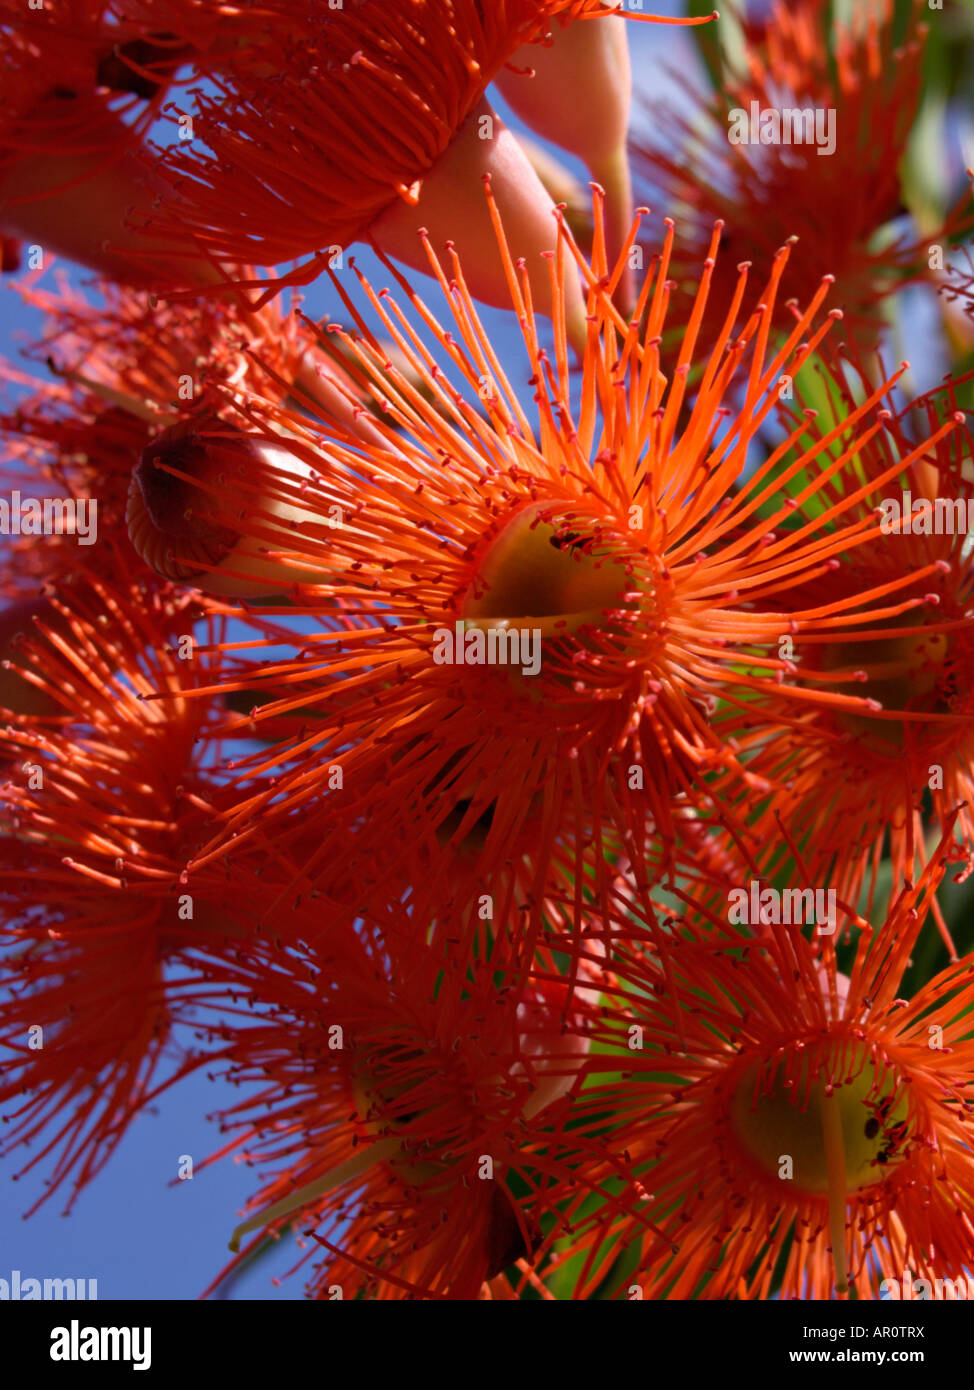 Red flowering gum (Corymbia ficifolia syn. Eucalyptus ficifolia) Stock Photo